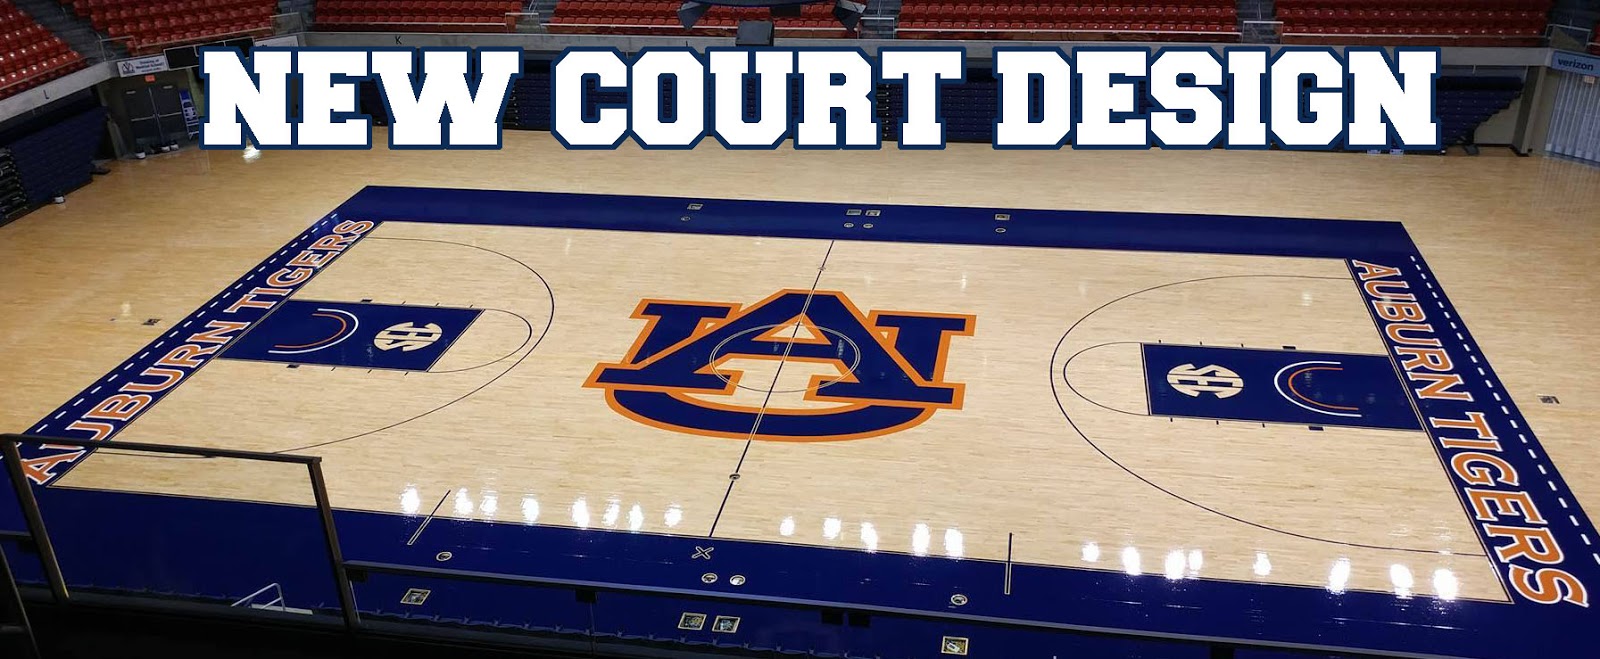 auburn basketball arena court design